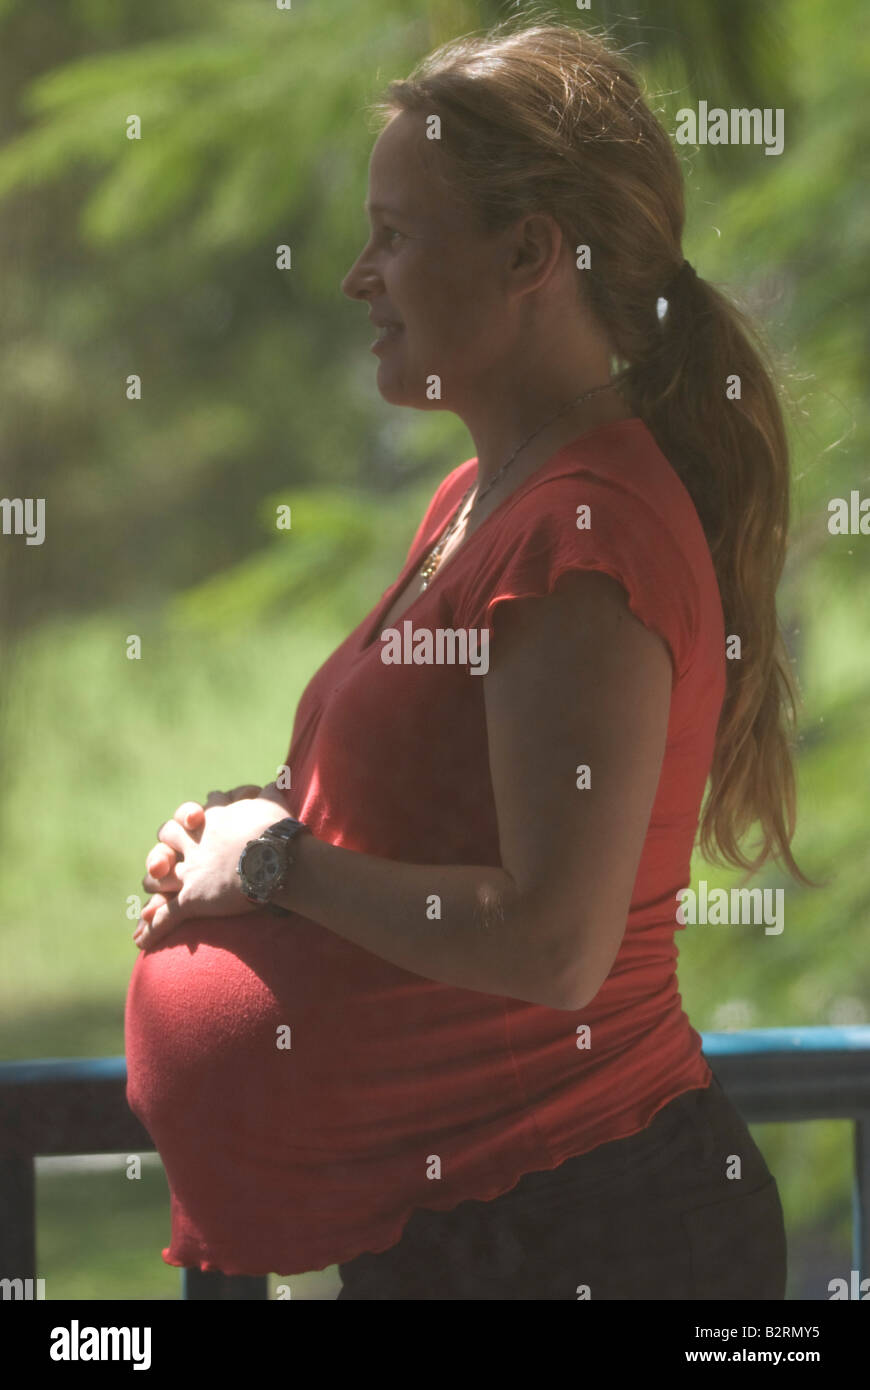 Pregnant woman seen through window screen Stock Photo